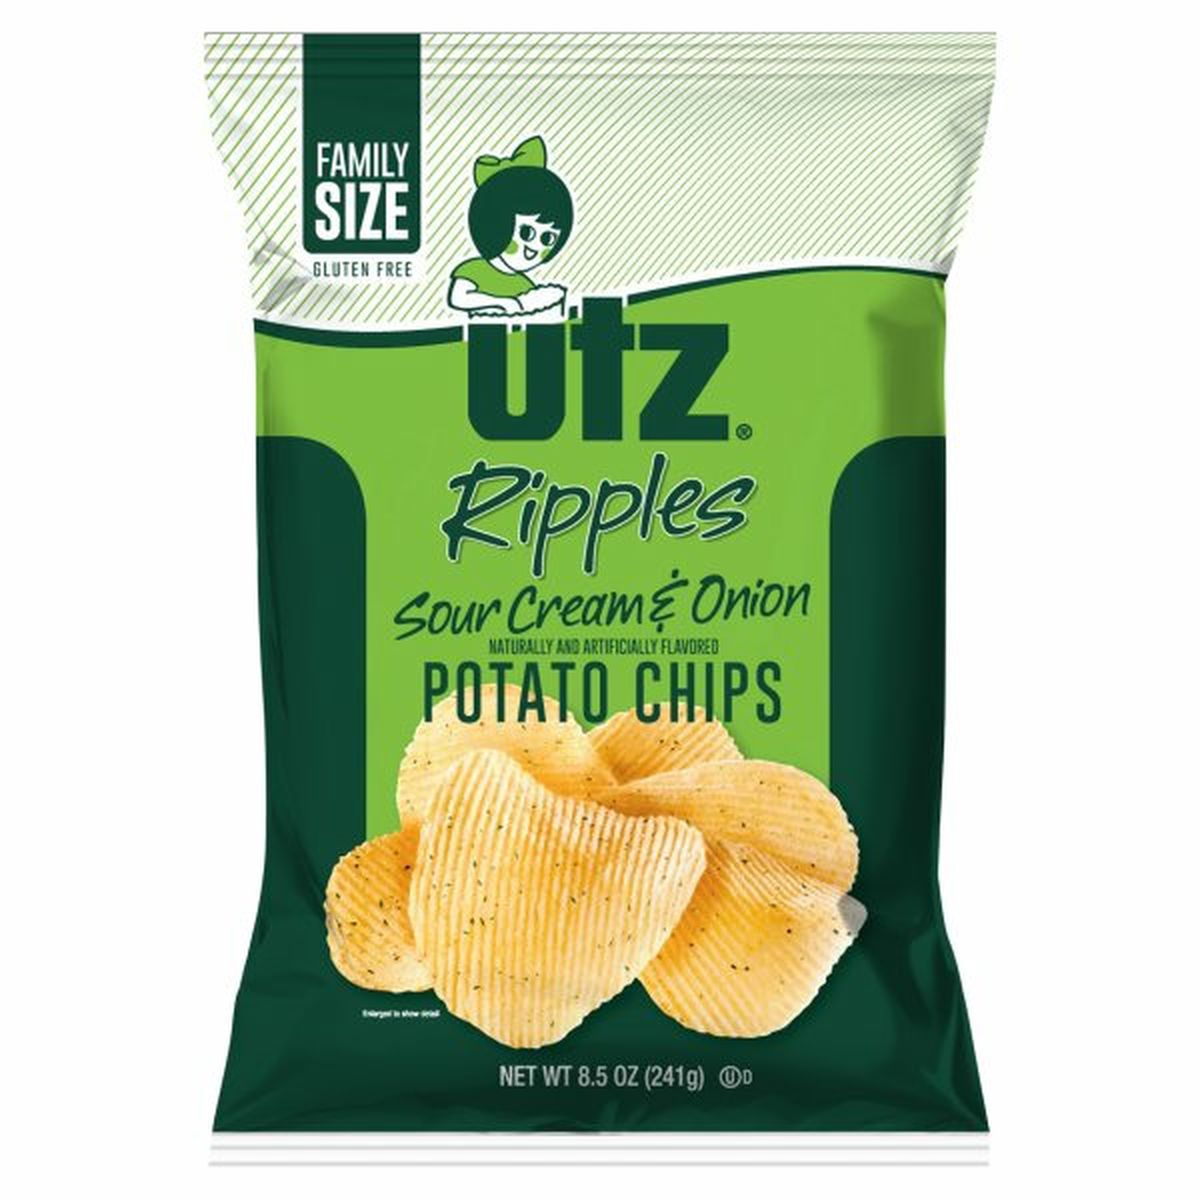 Calories in Utz Potato Chips, Sour Cream & Onion, Ripples, Family Size